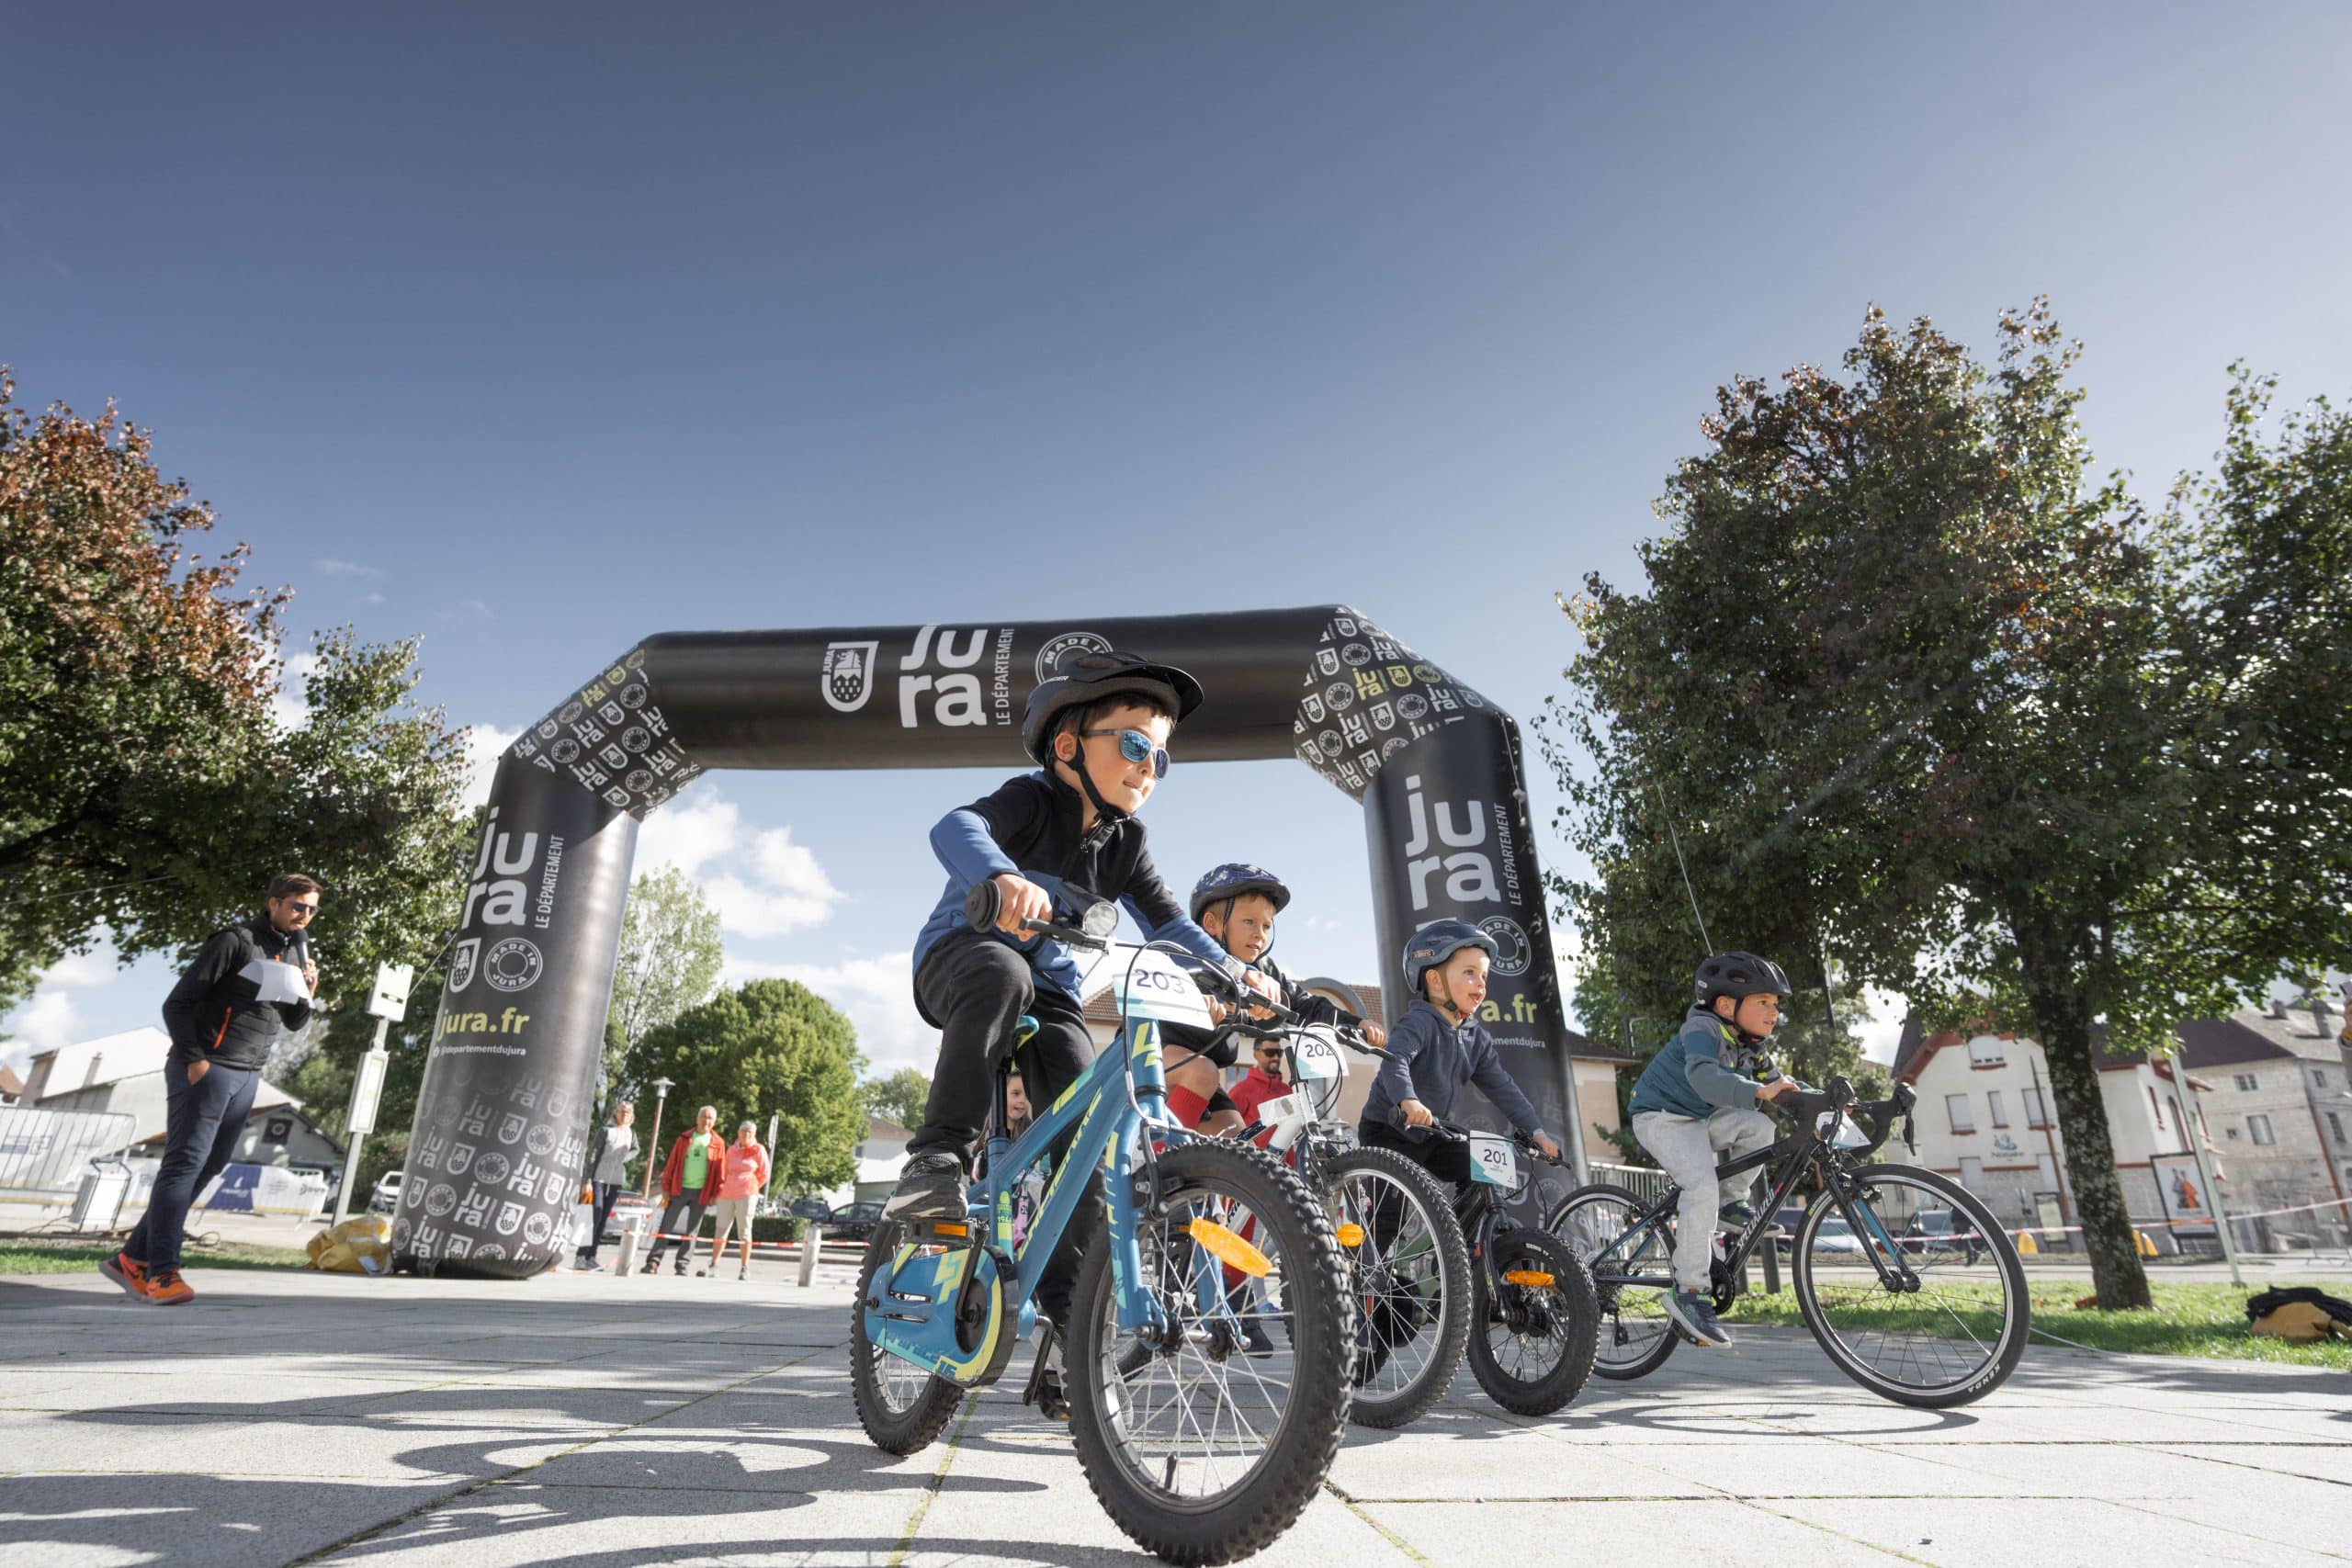 The Transju Cyclo Kids Bike Race in the Jura